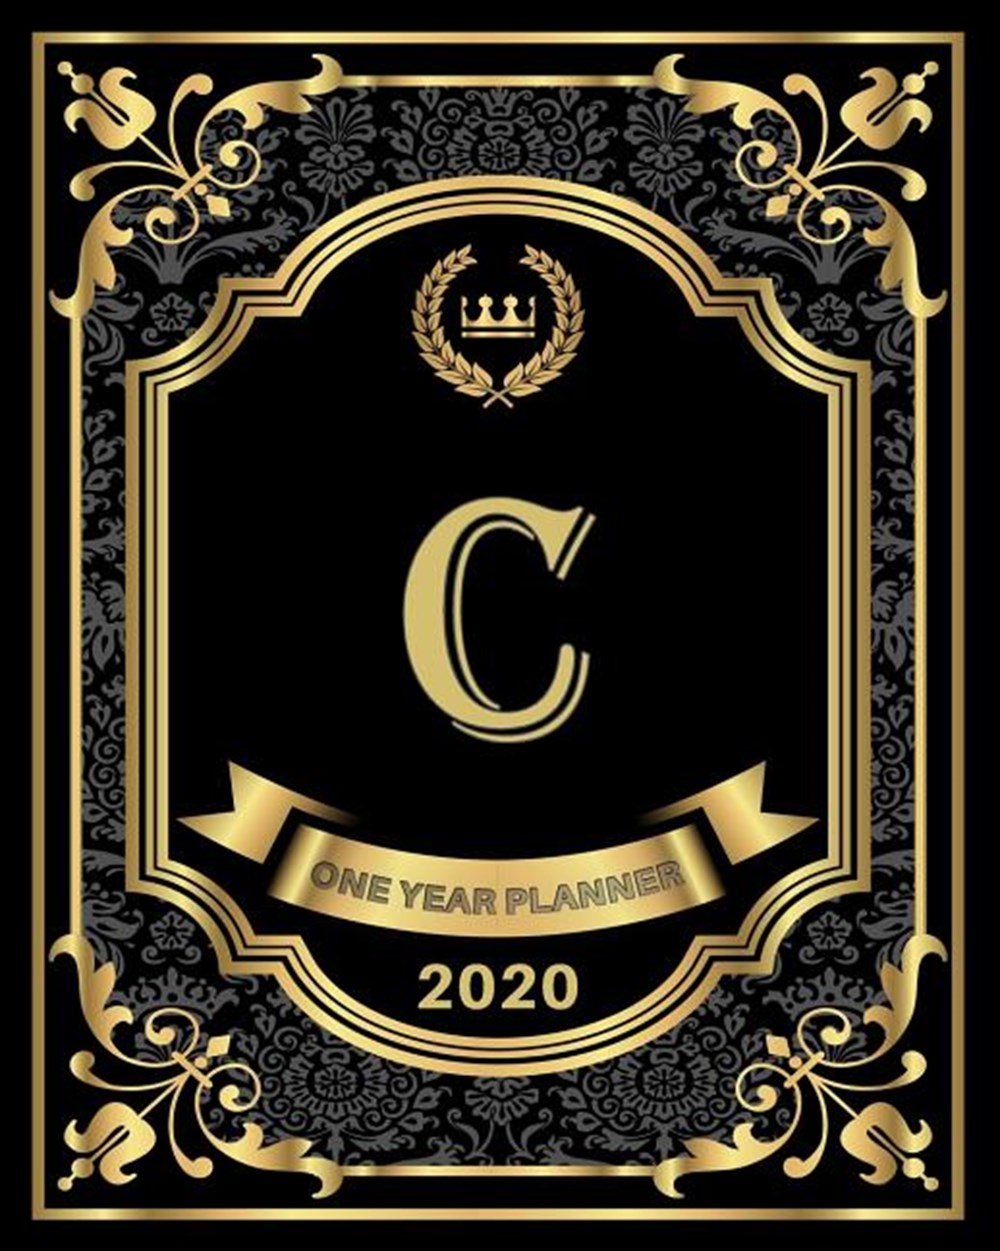 C - 2020 One Year Planner Elegant Black and Gold Monogram Initials - Pretty Calendar Organizer - One